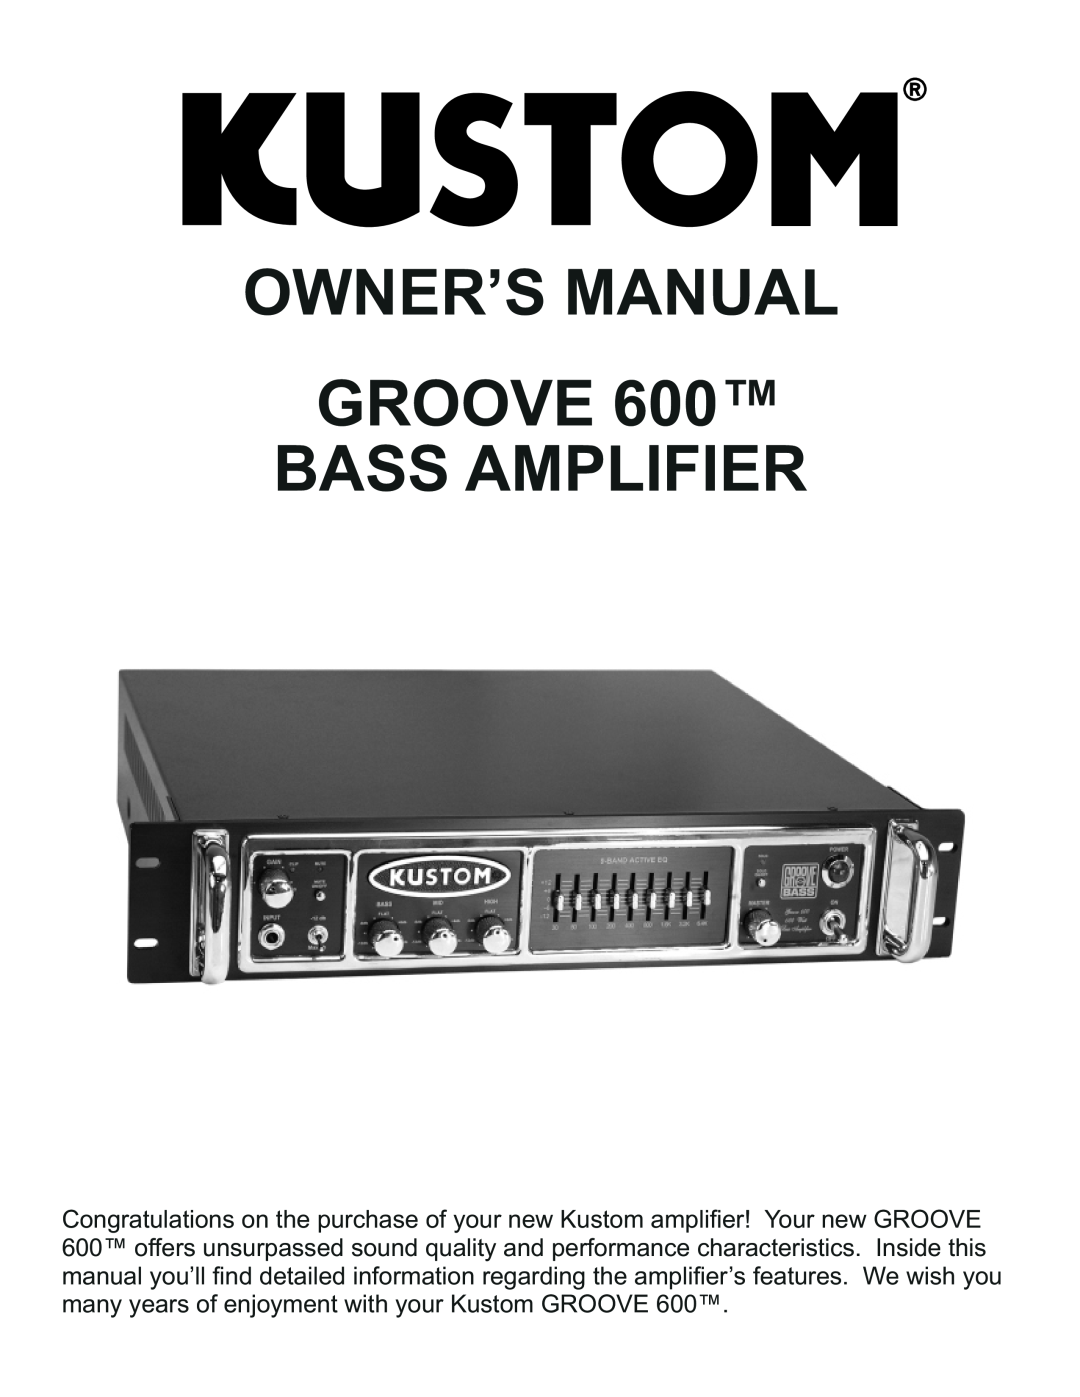 Kustom GROOVE 600TM owner manual Groove Bass Amplifier 